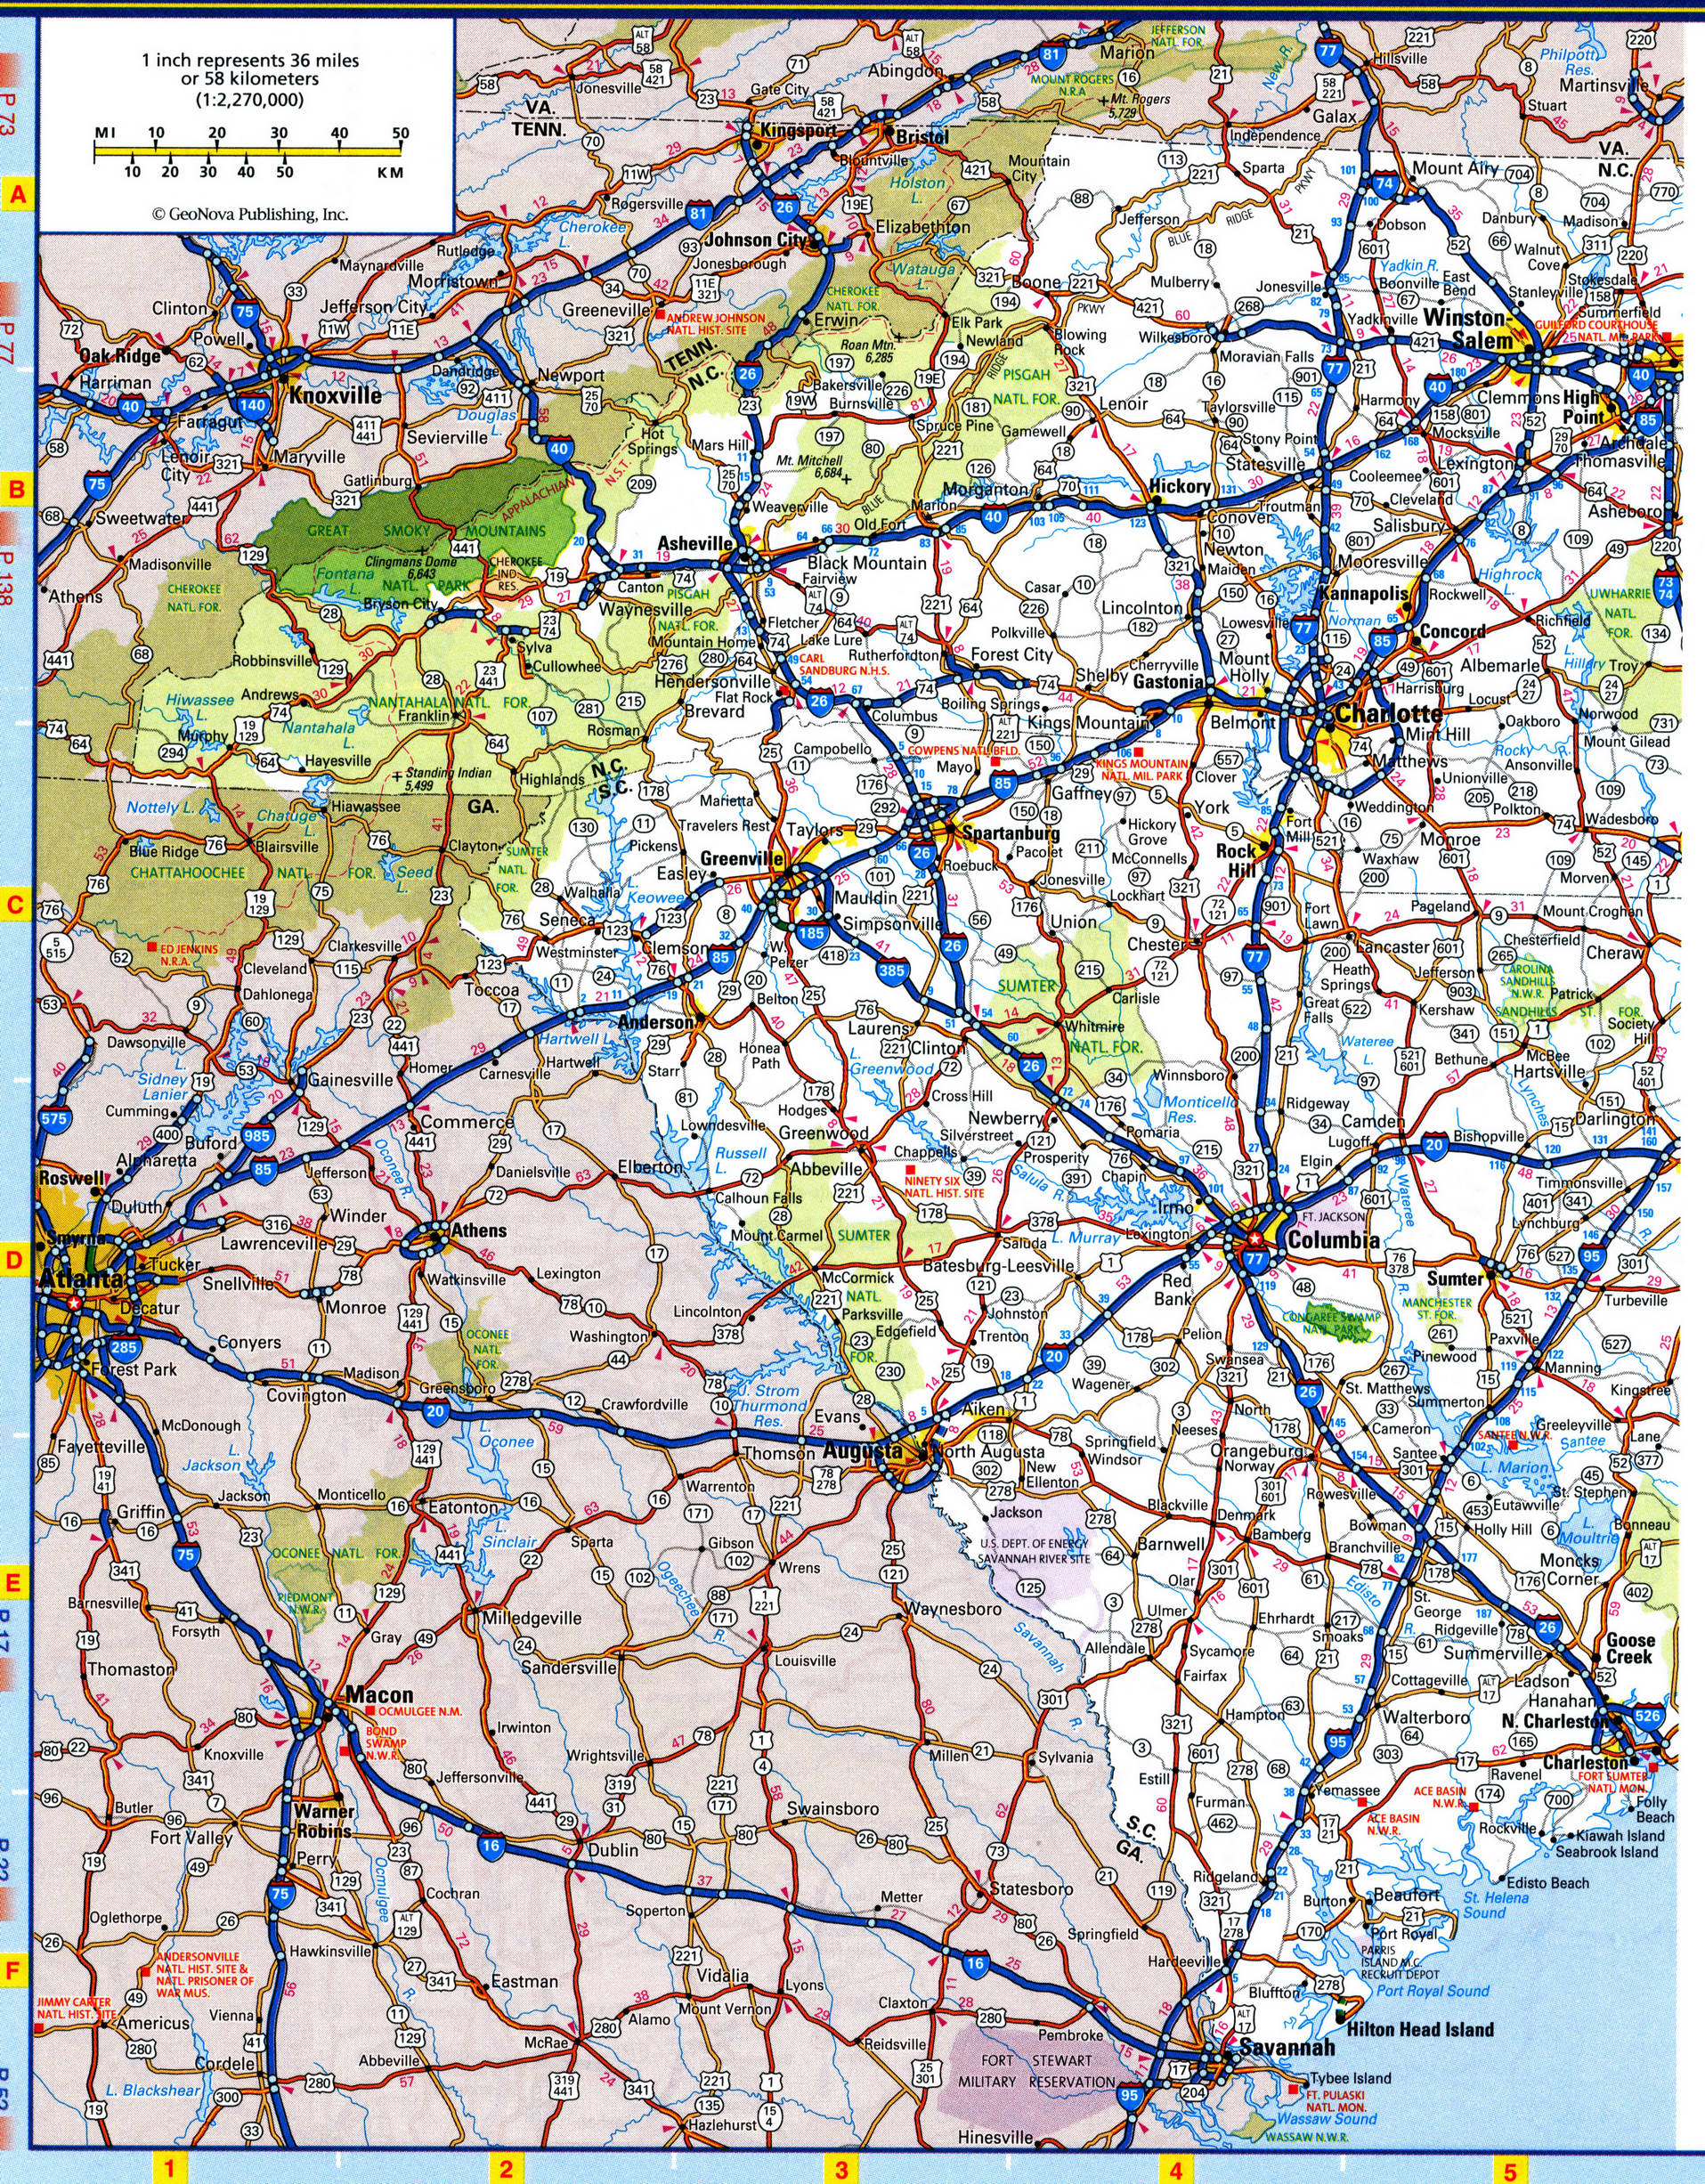 North Carolina highways map